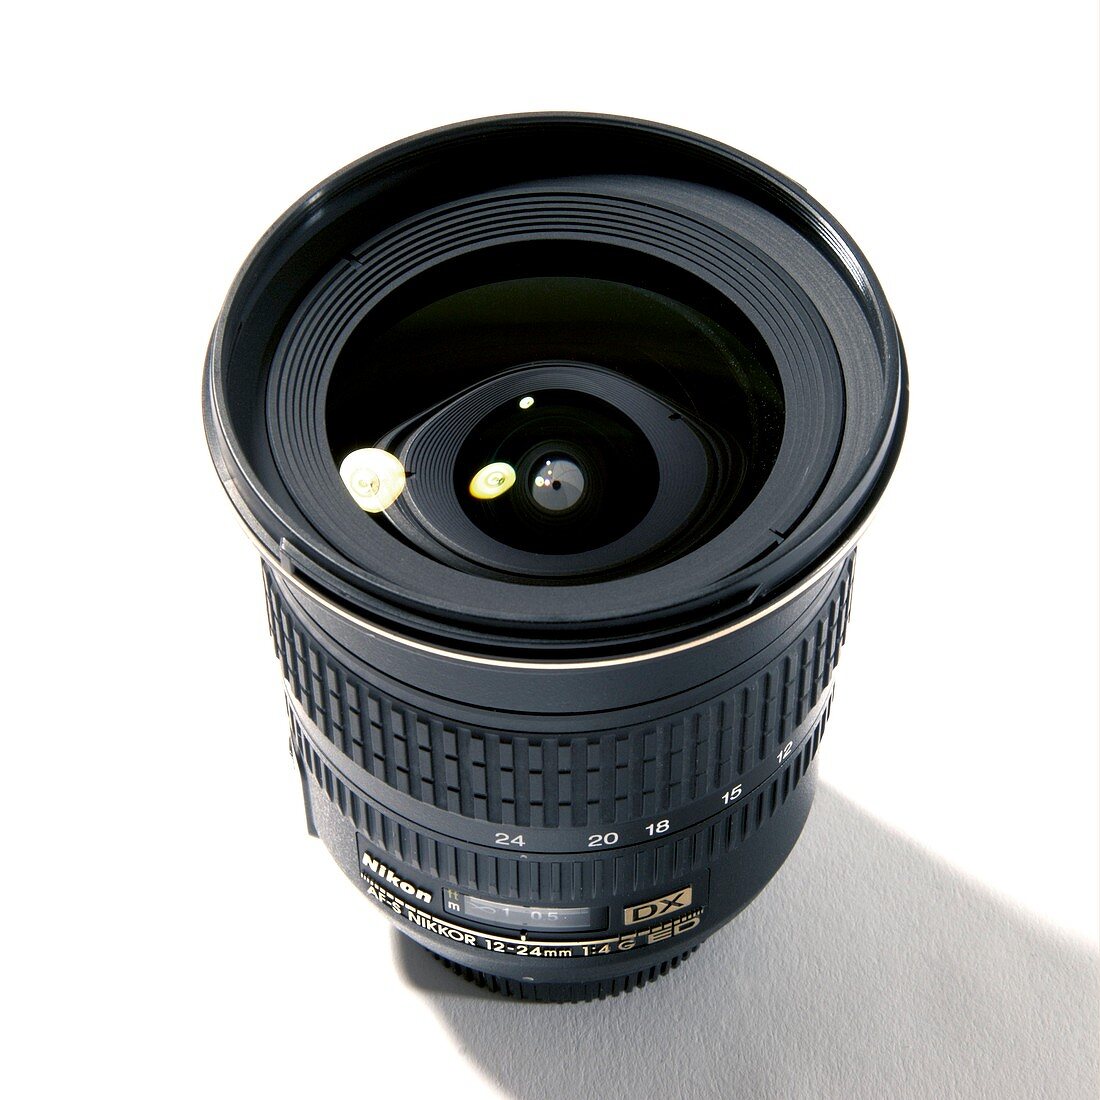 Wide-angle zoom camera lens